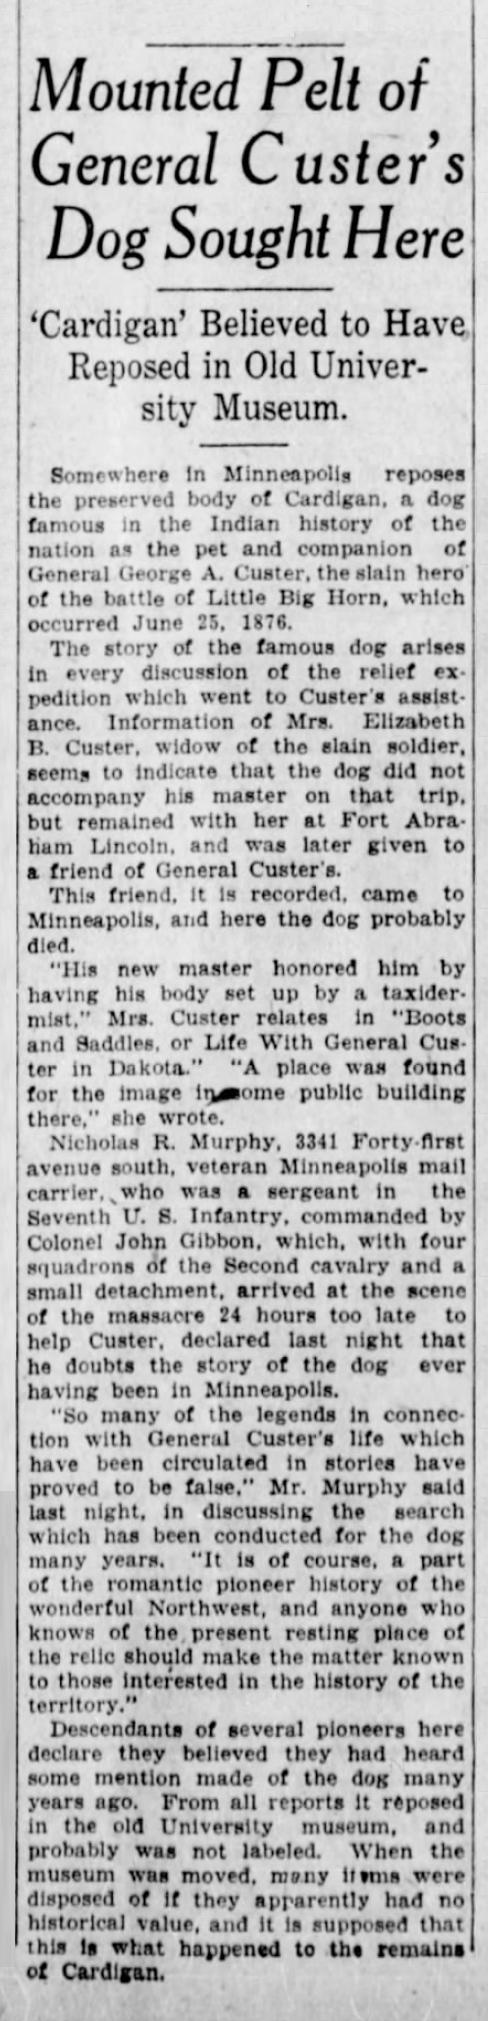 1923 Minneapolis Tribune March 21 article